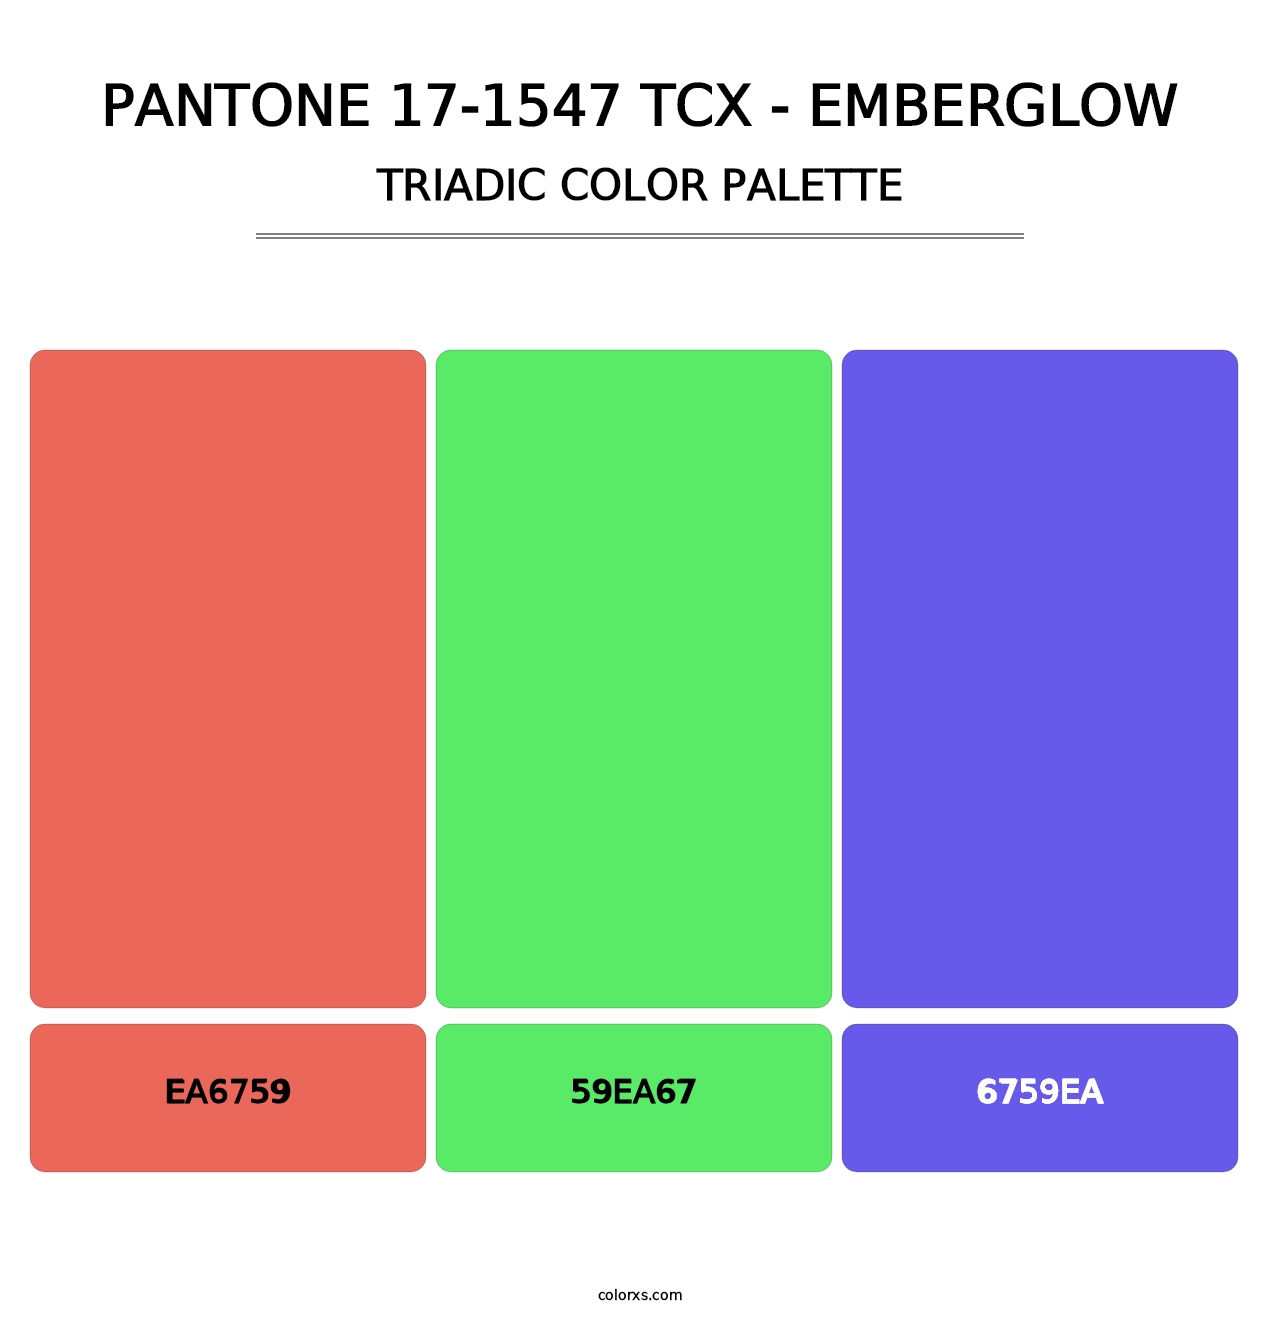 PANTONE 17-1547 TCX - Emberglow - Triadic Color Palette